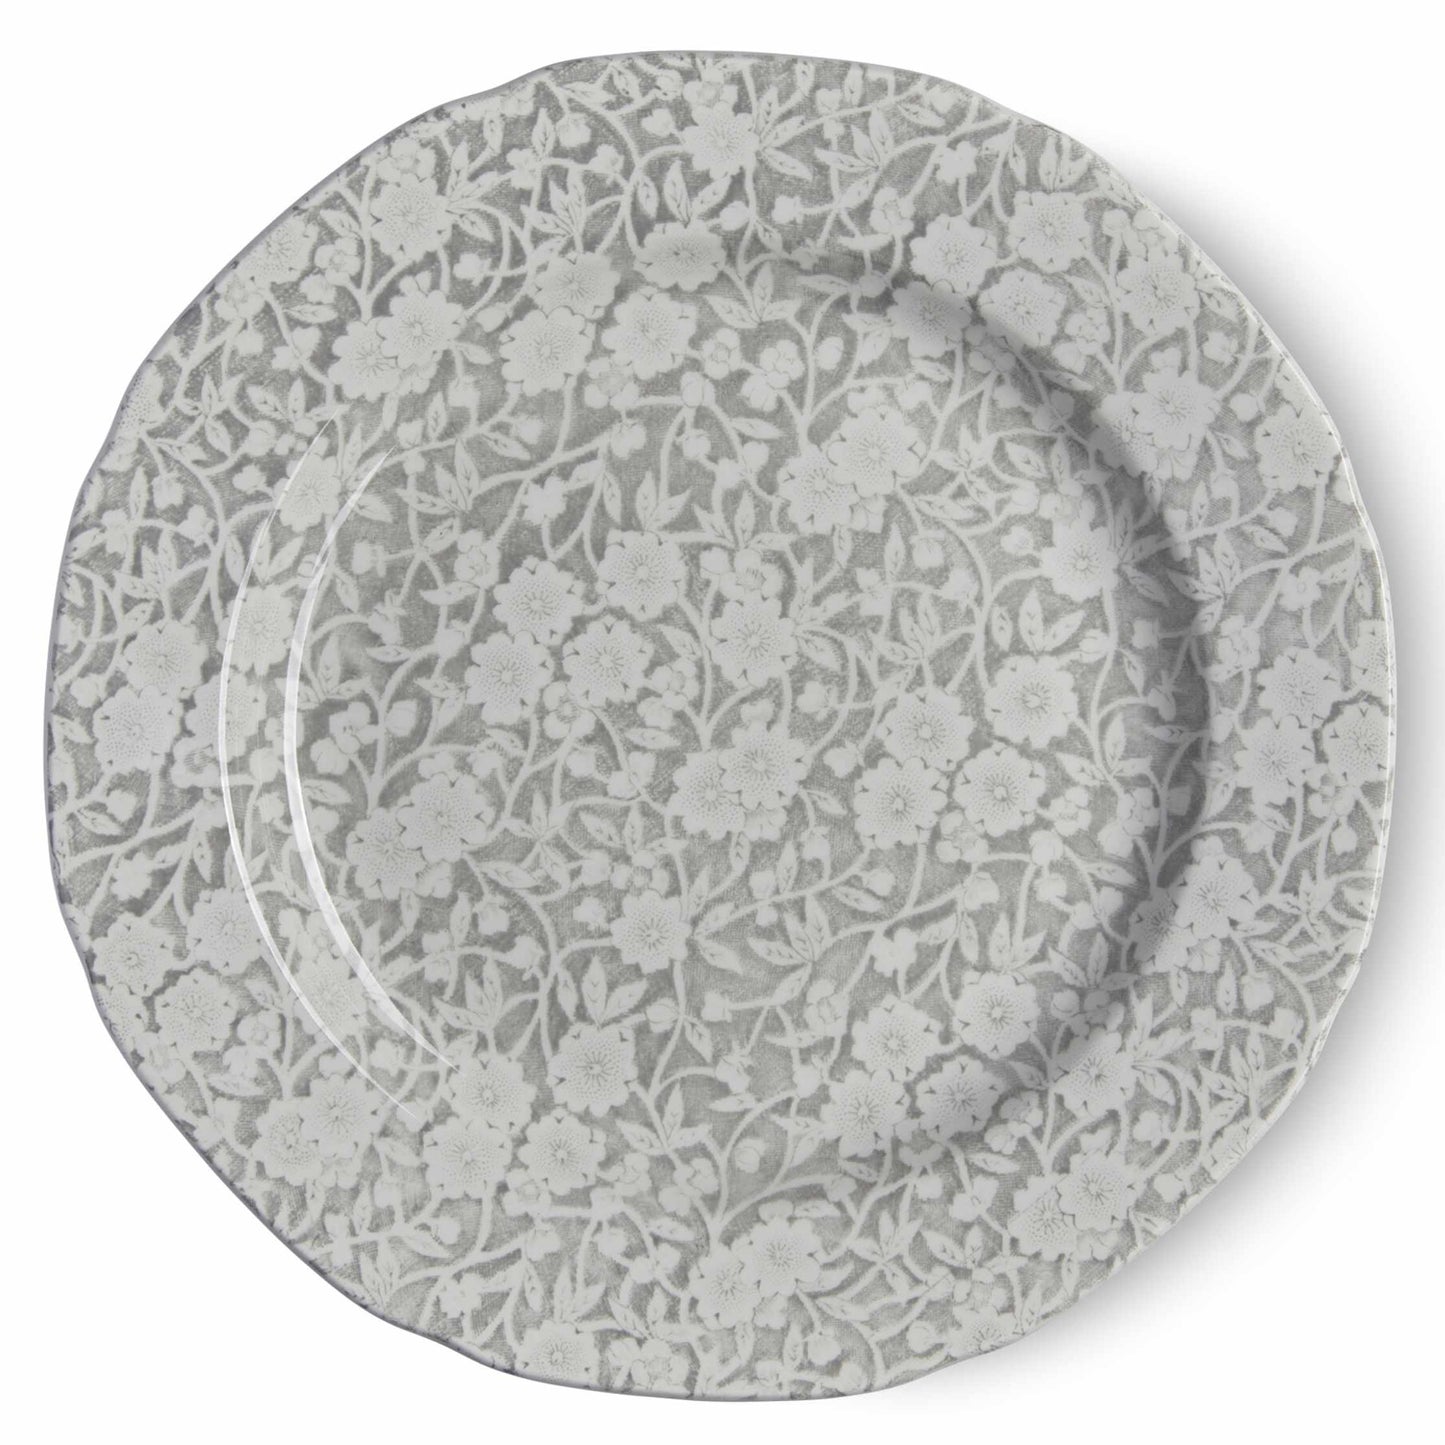 Dove Grey Calico Plate 21.5cm / 8.5" Seconds